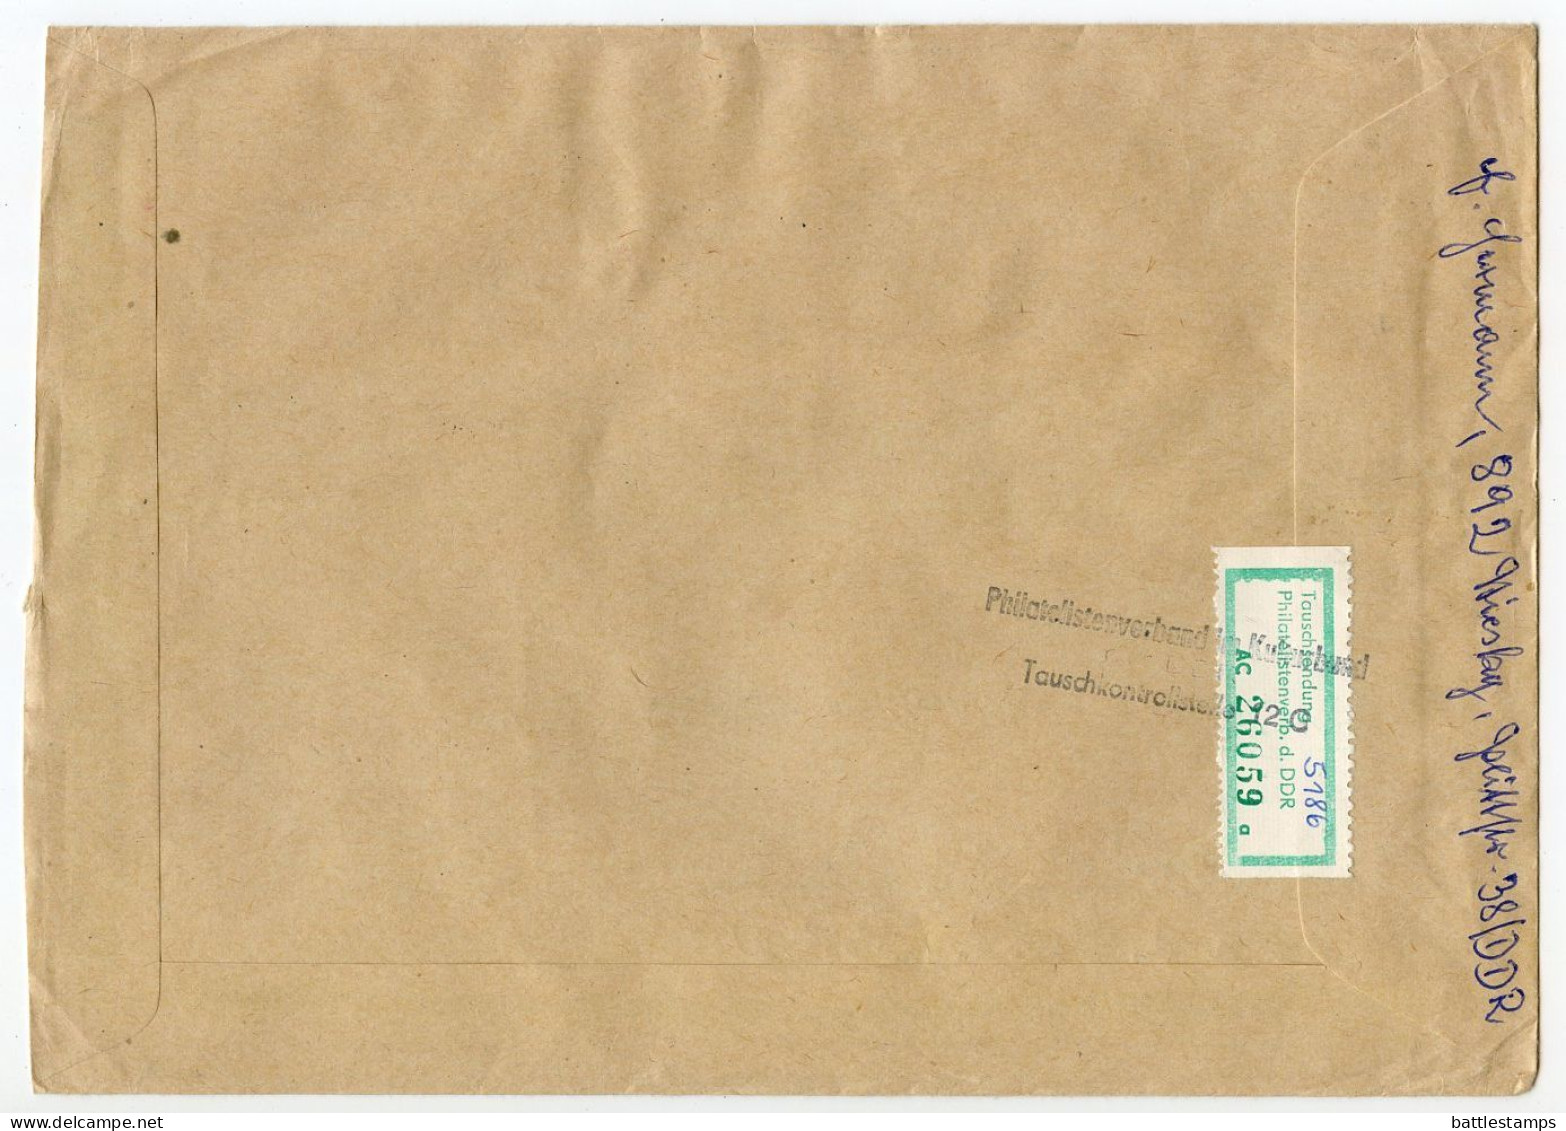 Germany East 1979 Registered Cover; Görlitz To Vienenburg; Circus & Other Stamps; Tauschsendung (Exchange Control) Label - Cartas & Documentos